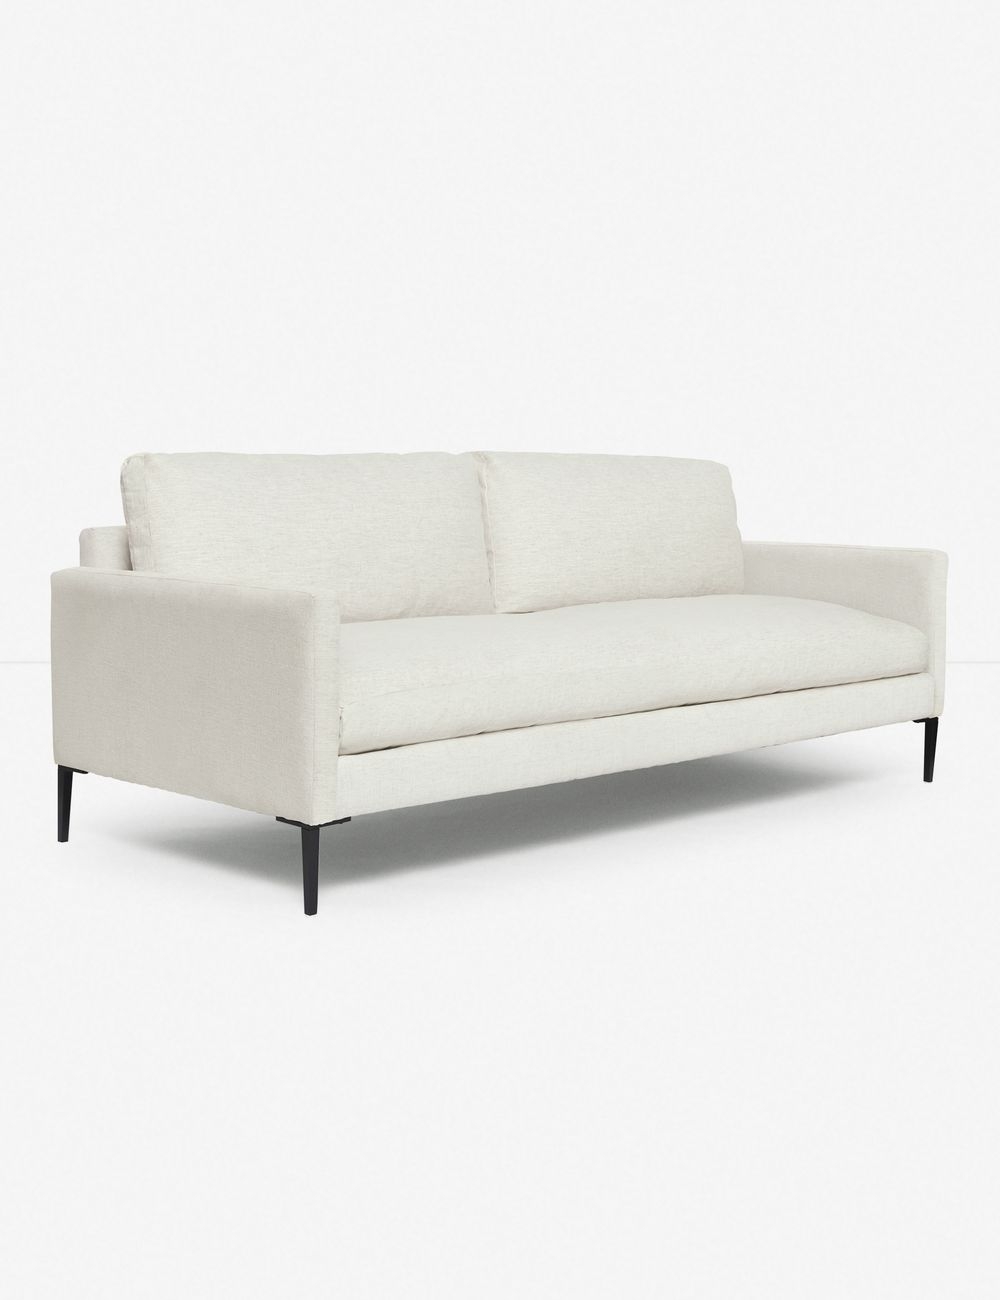 Allisen Sofa - Image 1